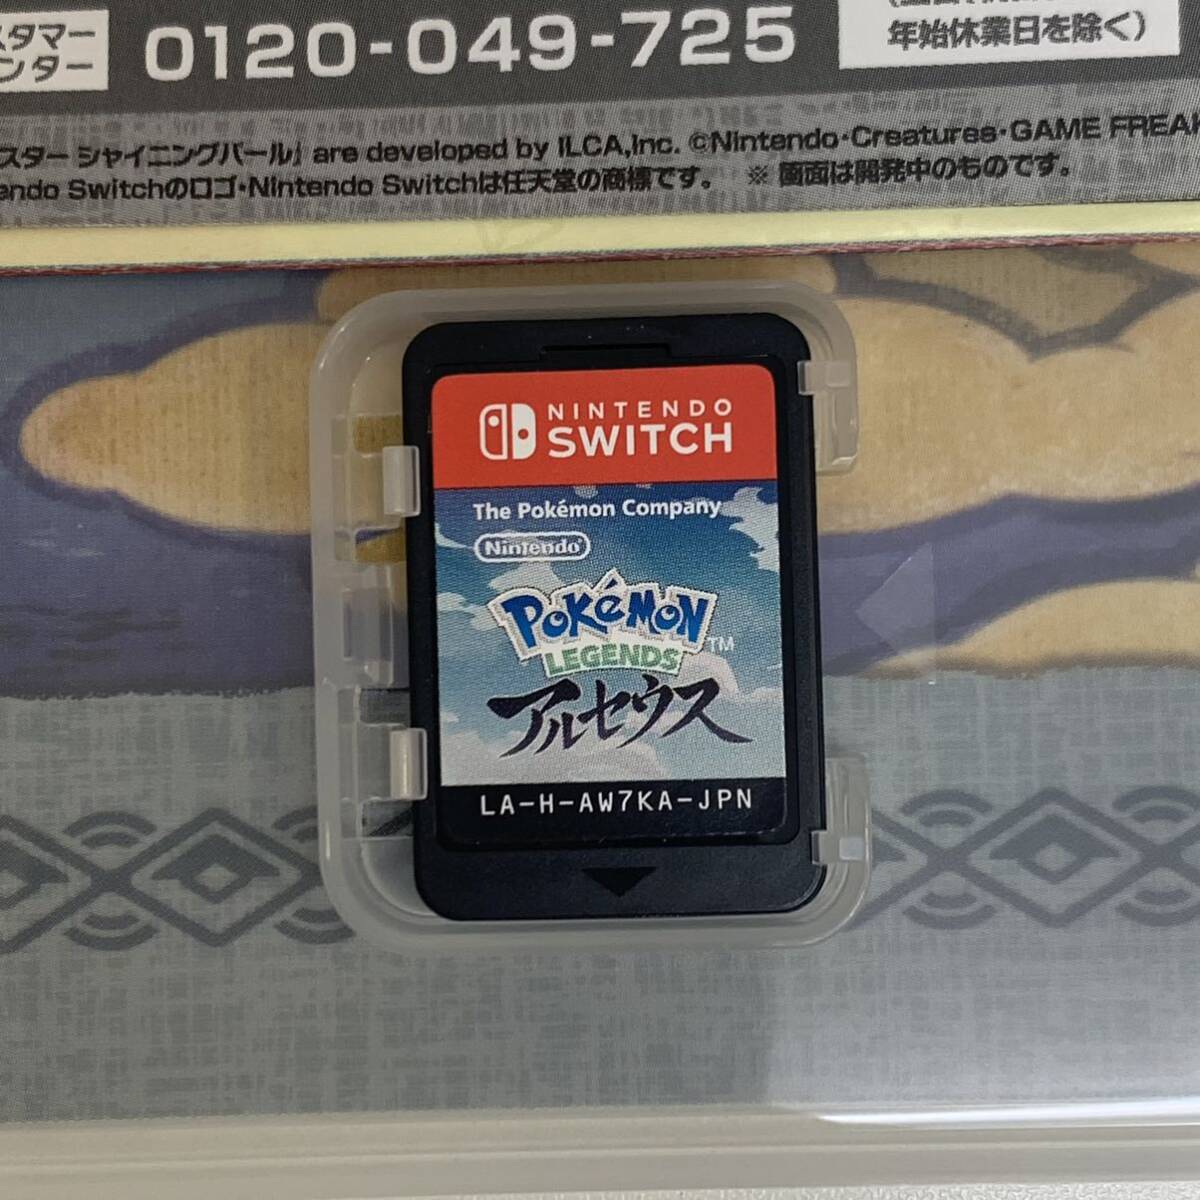 [TC0423]Nintendo Swich Pokemon Legend aruse light Pocket Monster Pikachu nintendo swichi game soft operation not yet verification 